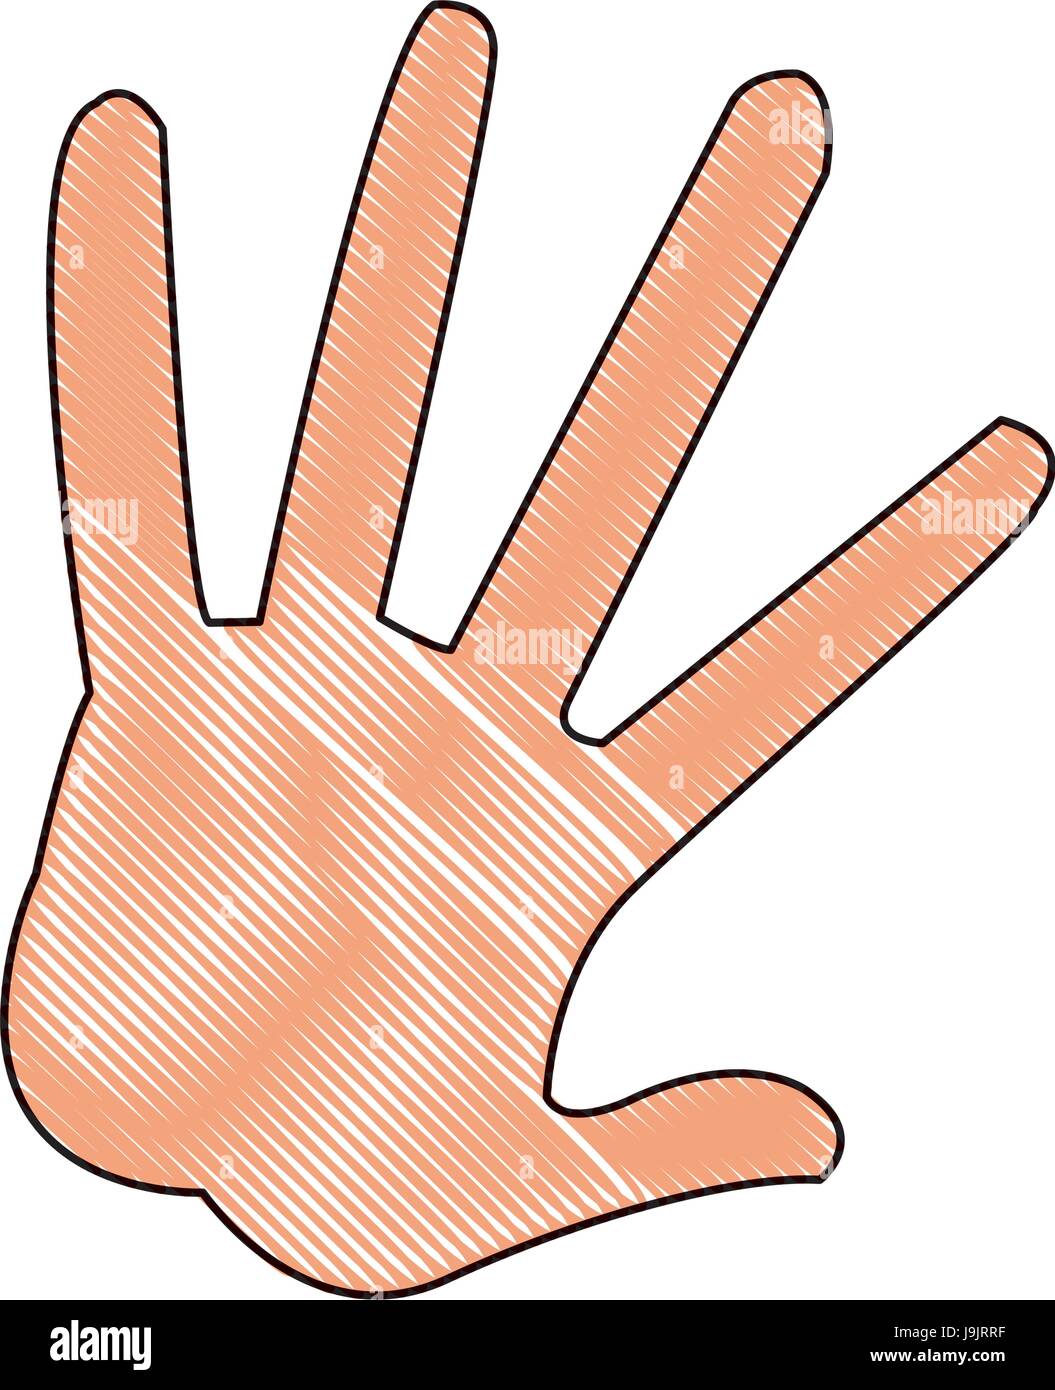 cartoon hand showing the five fingers vector illustration Stock Vector